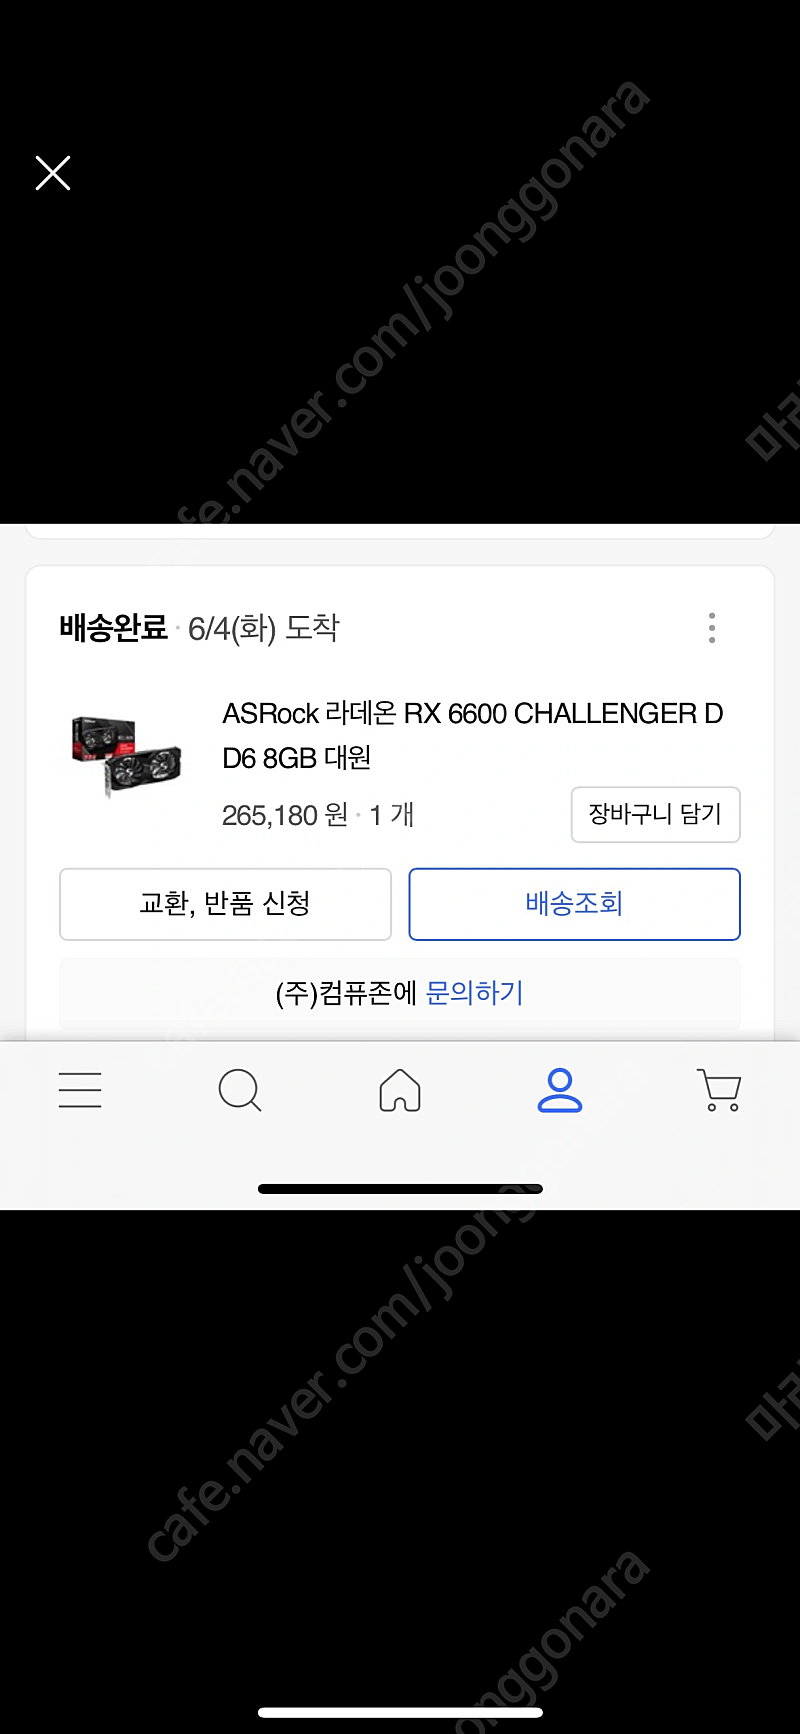 AMD 애즈락 라데온 챌린저 rx6600 8gb 팝니다